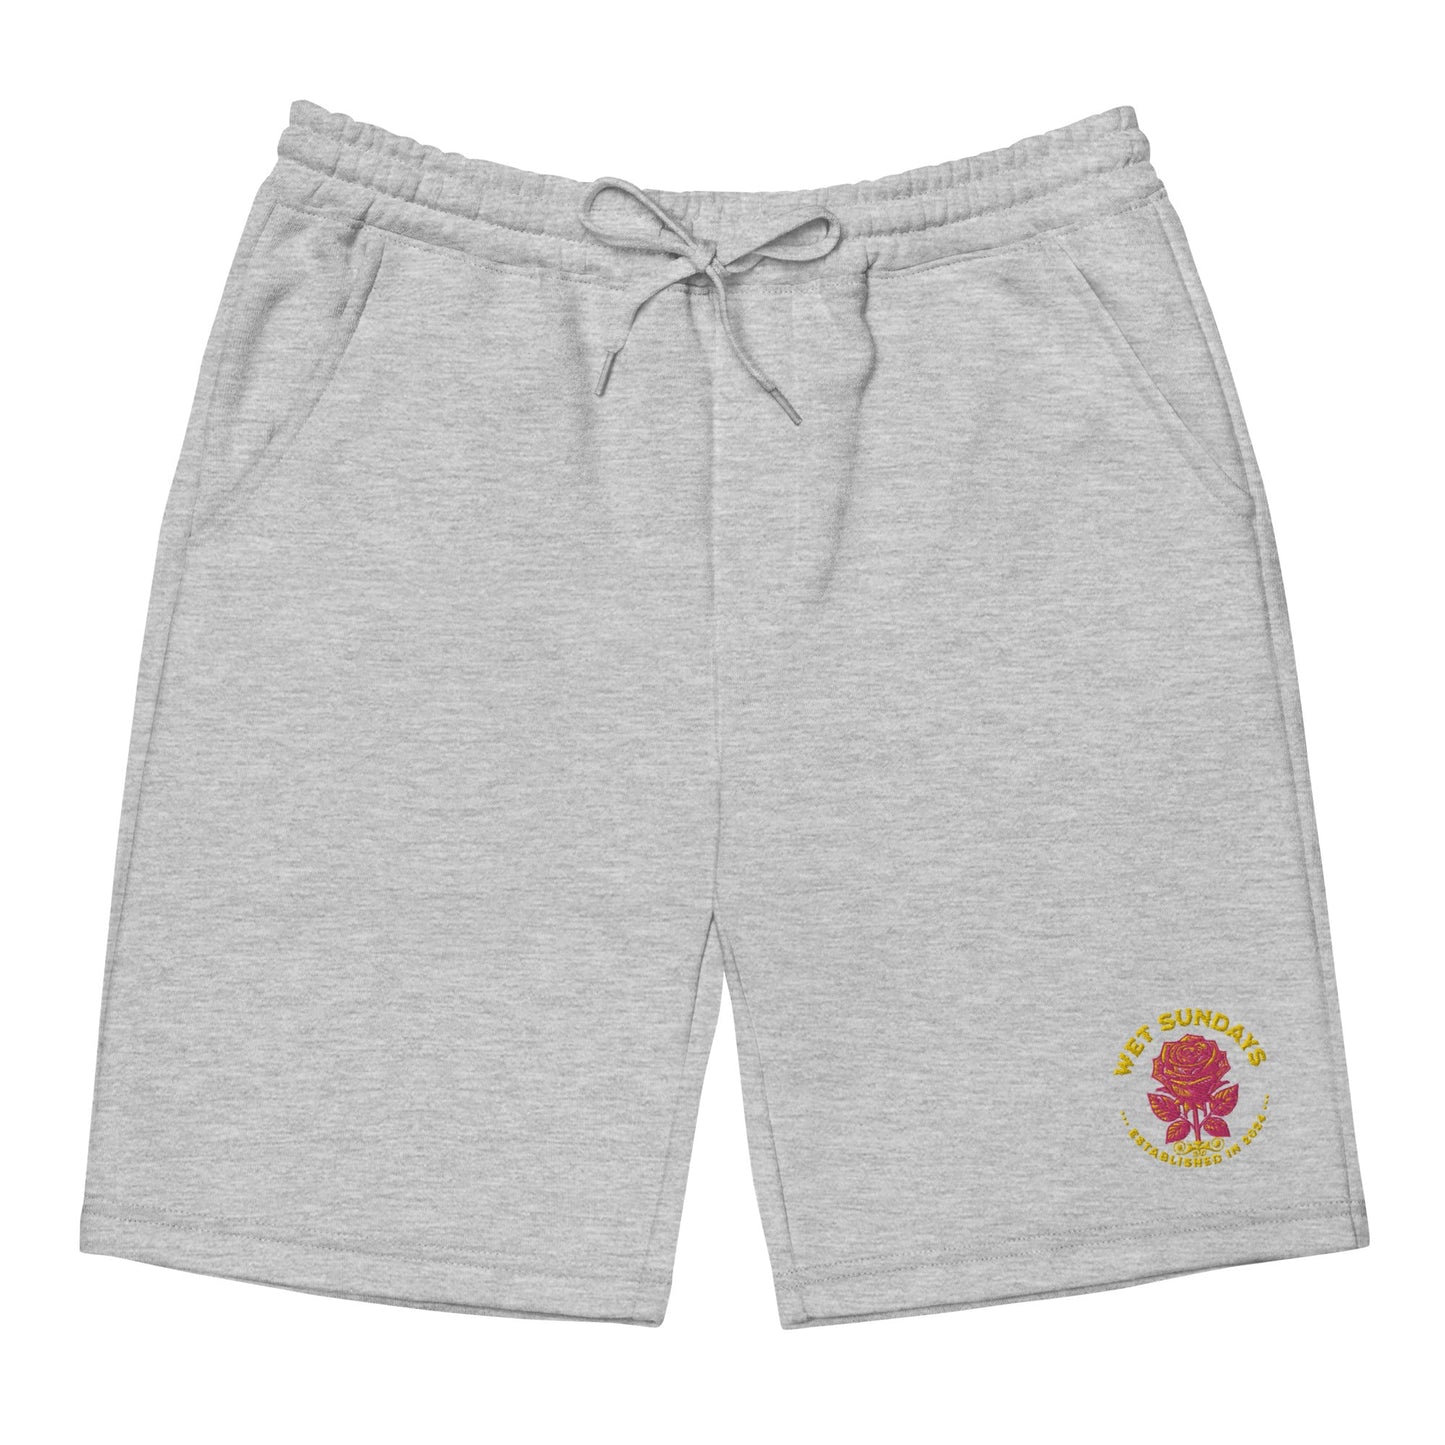 Men's Roses Embroidery fleece shorts - Wet Sundays